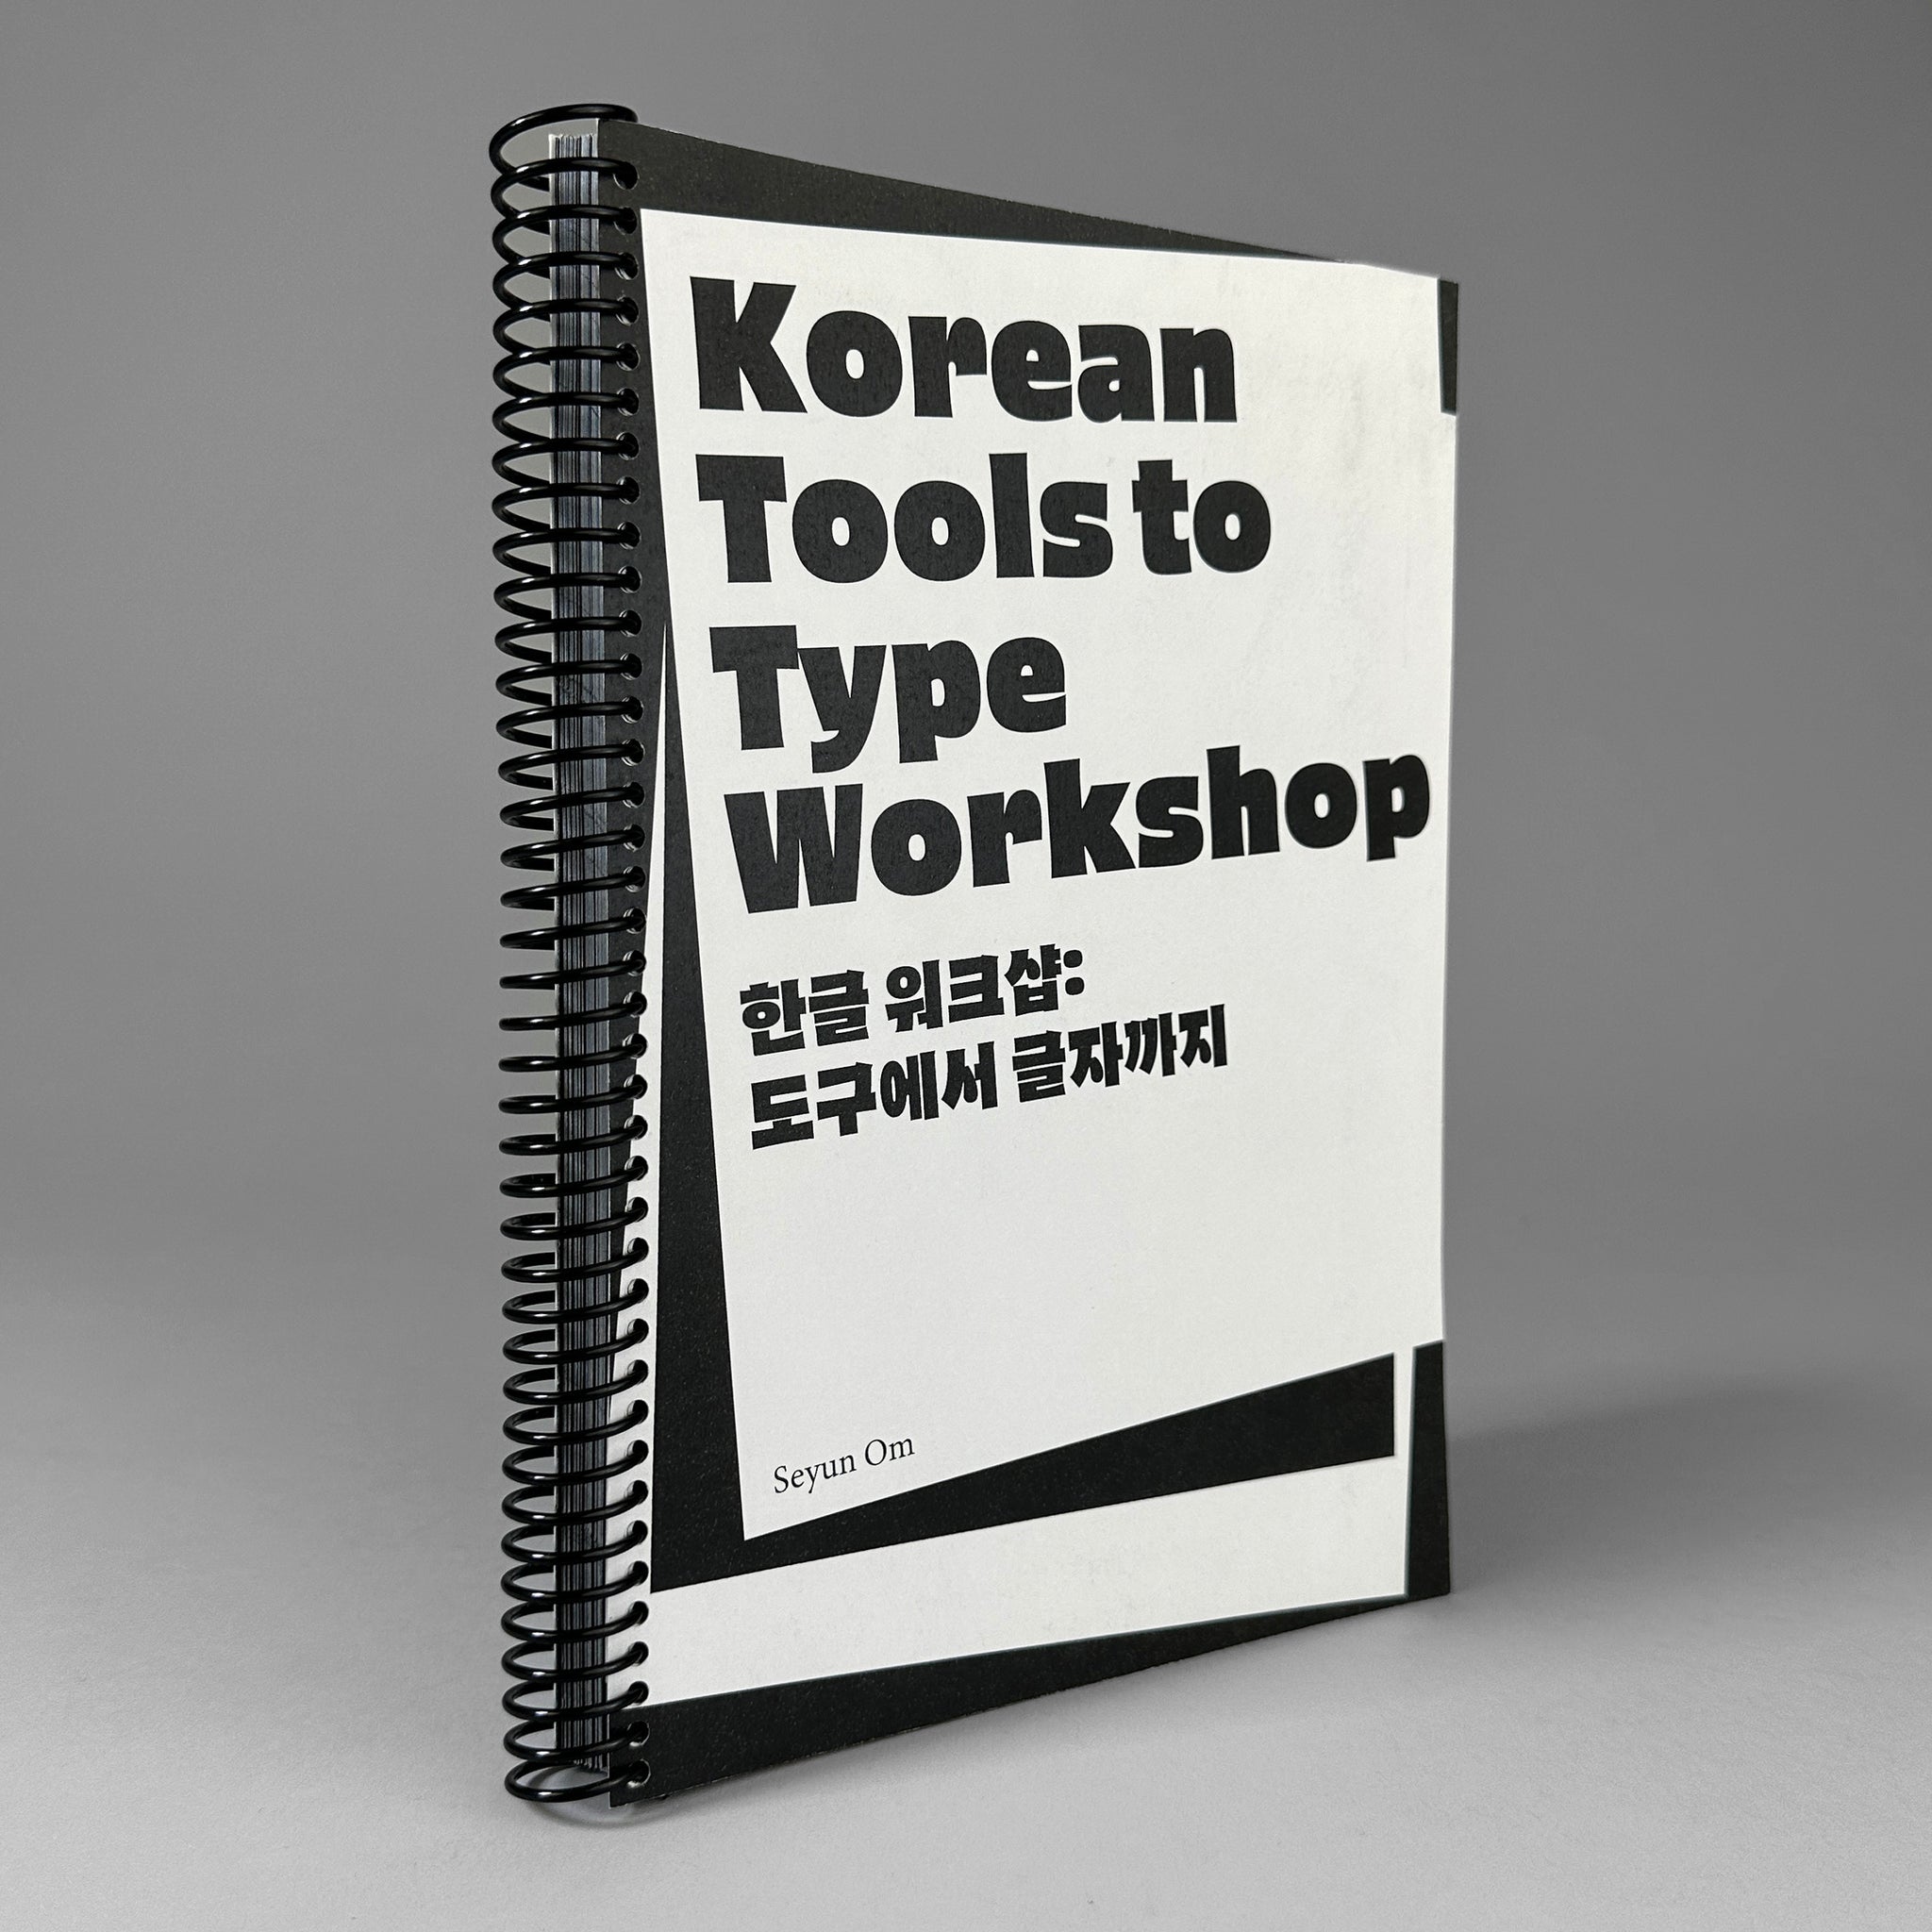 Korean Tools to Type Workshop